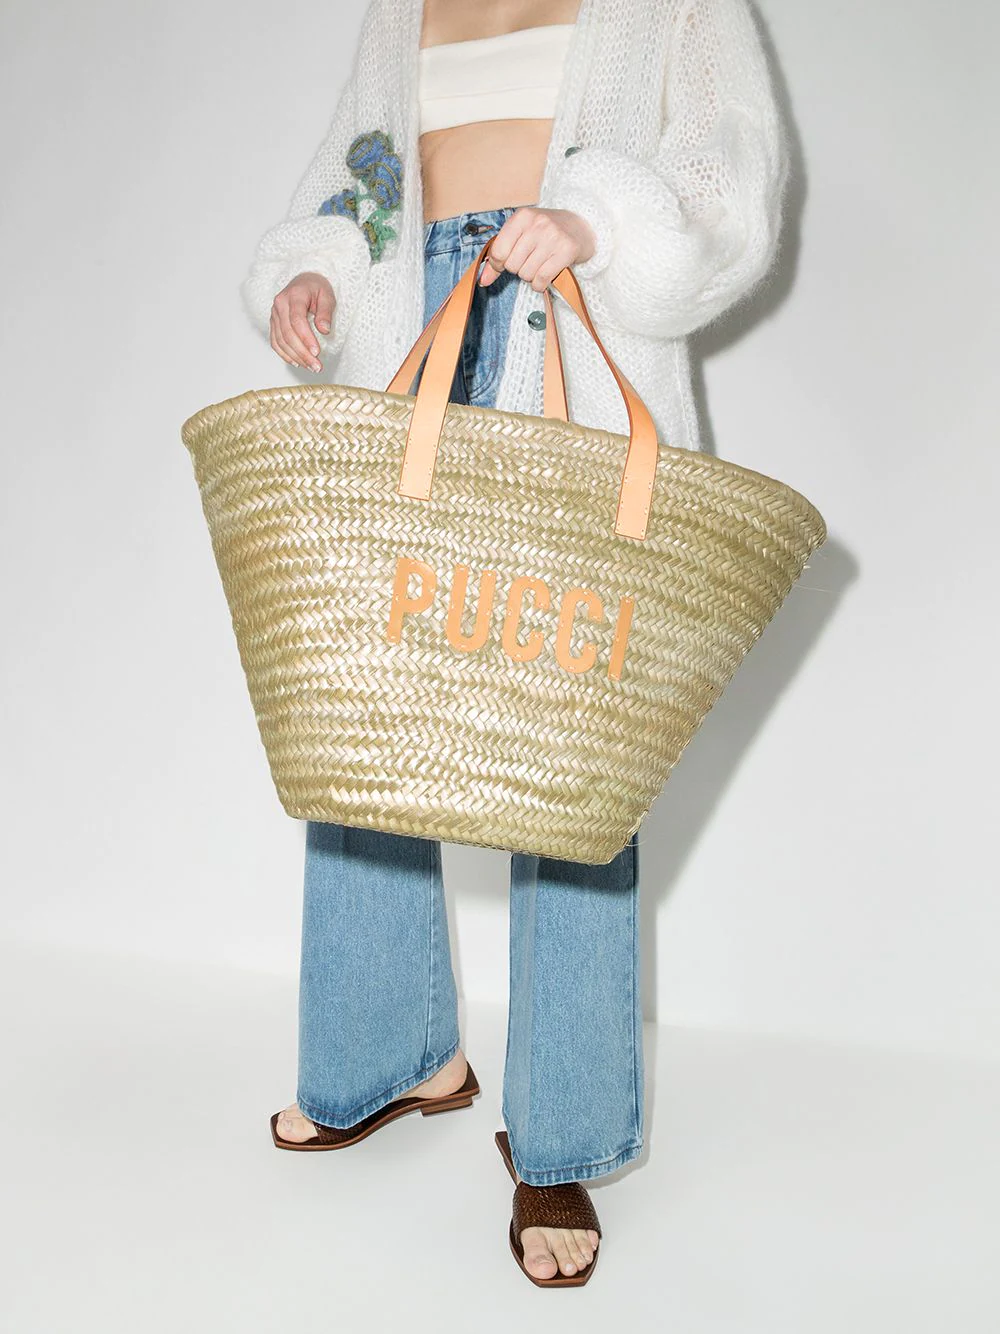 Emilio Pucci
logo-embellished basket bag